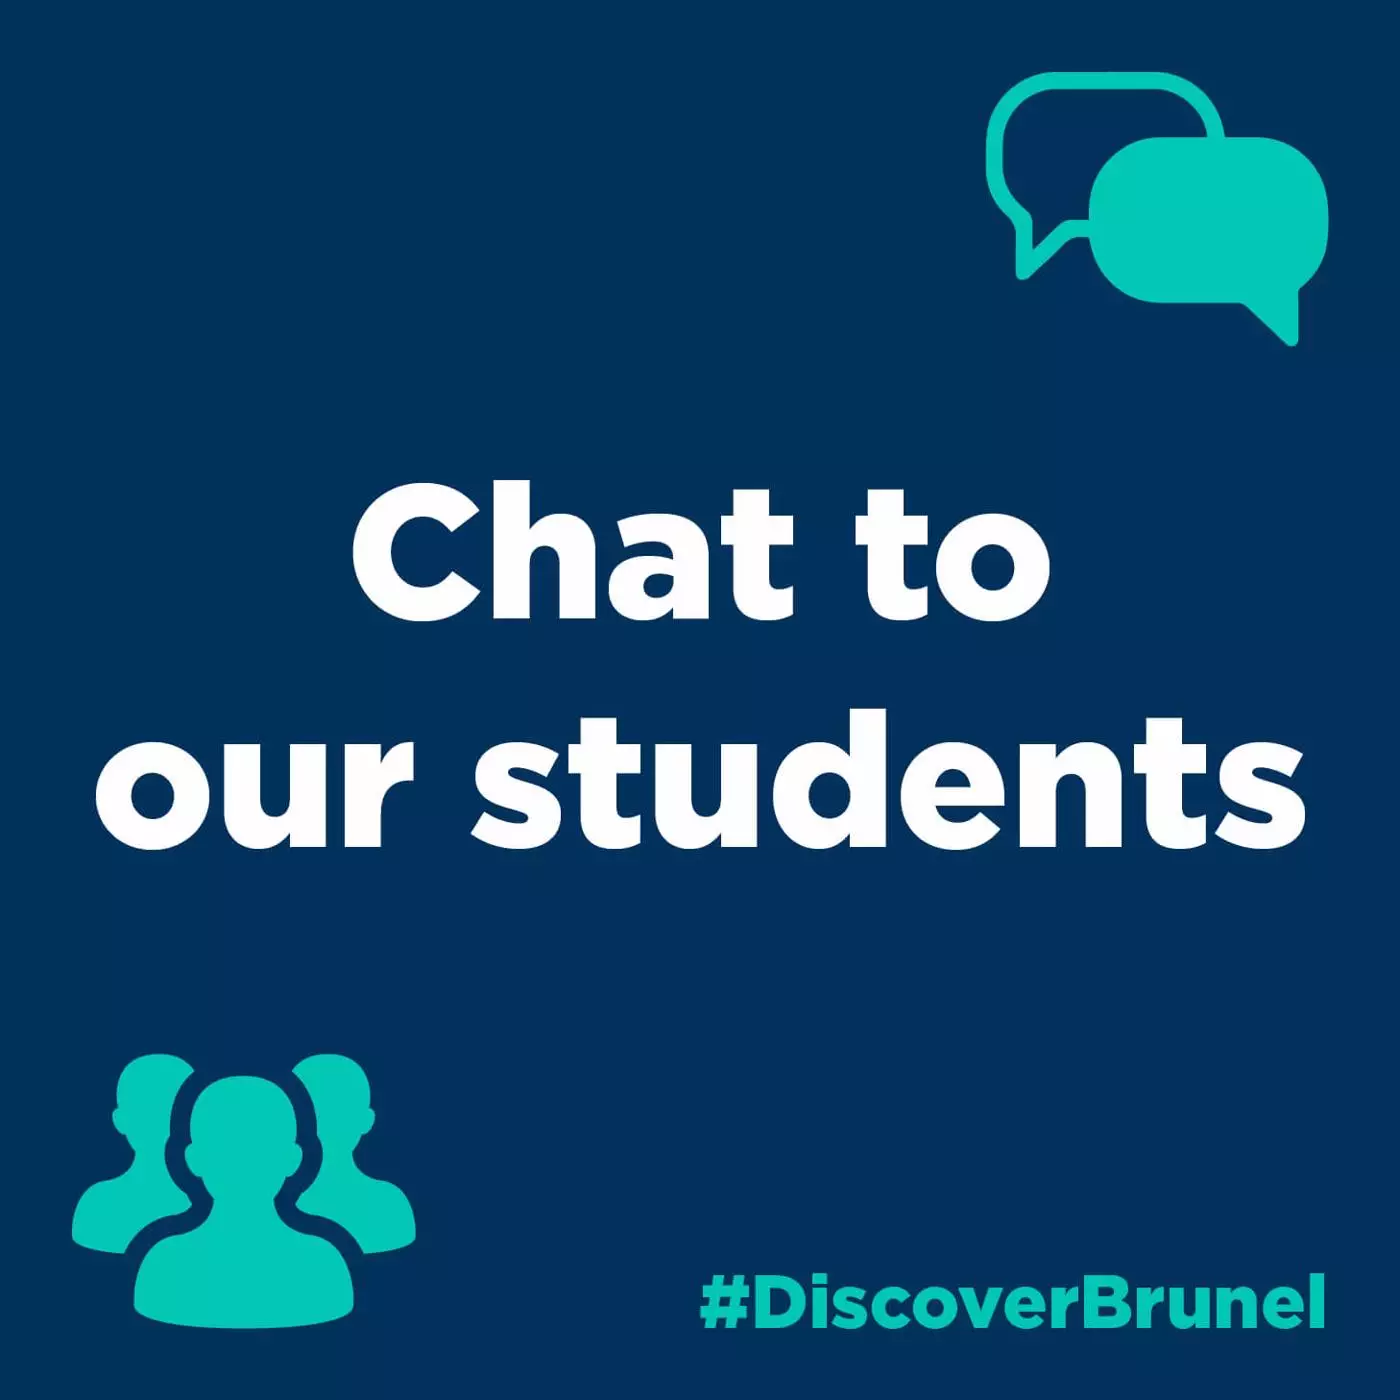 Brunel University student chat